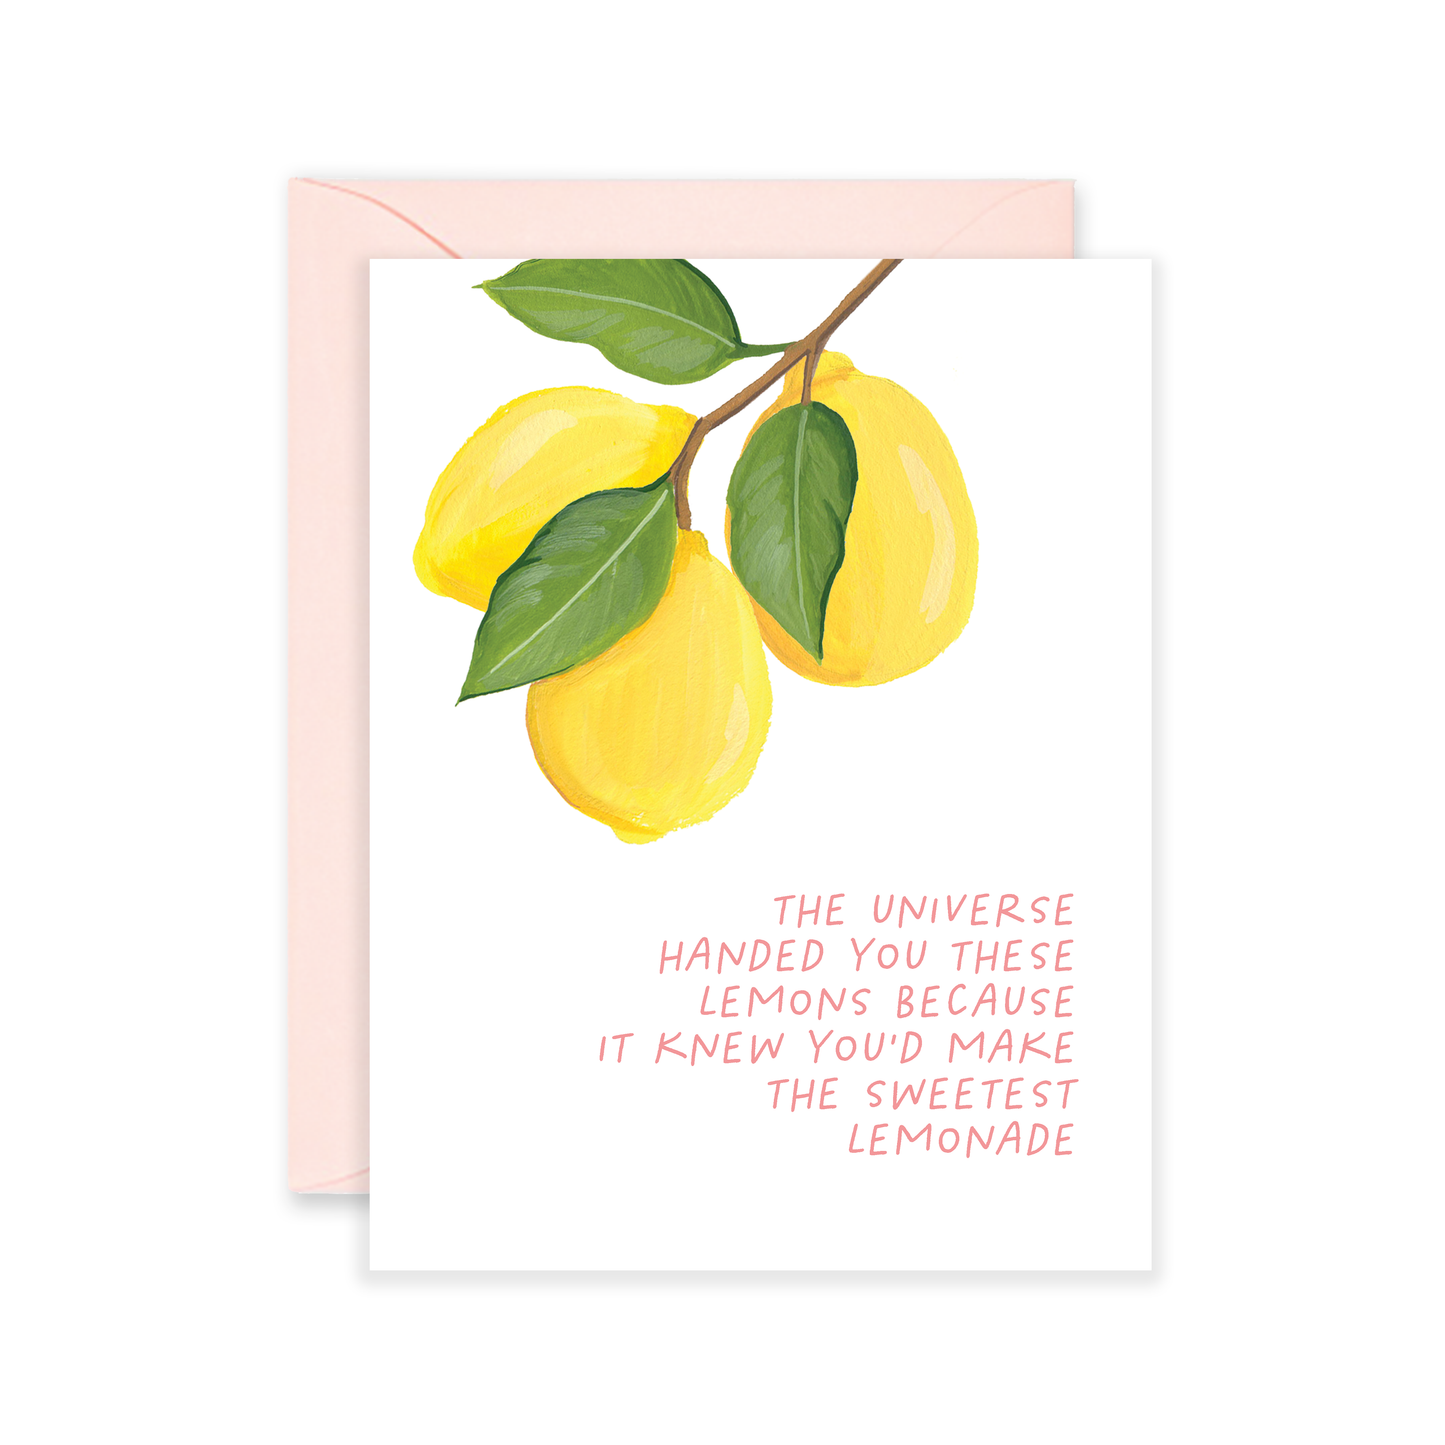 Sweetest Lemonade Card - $2